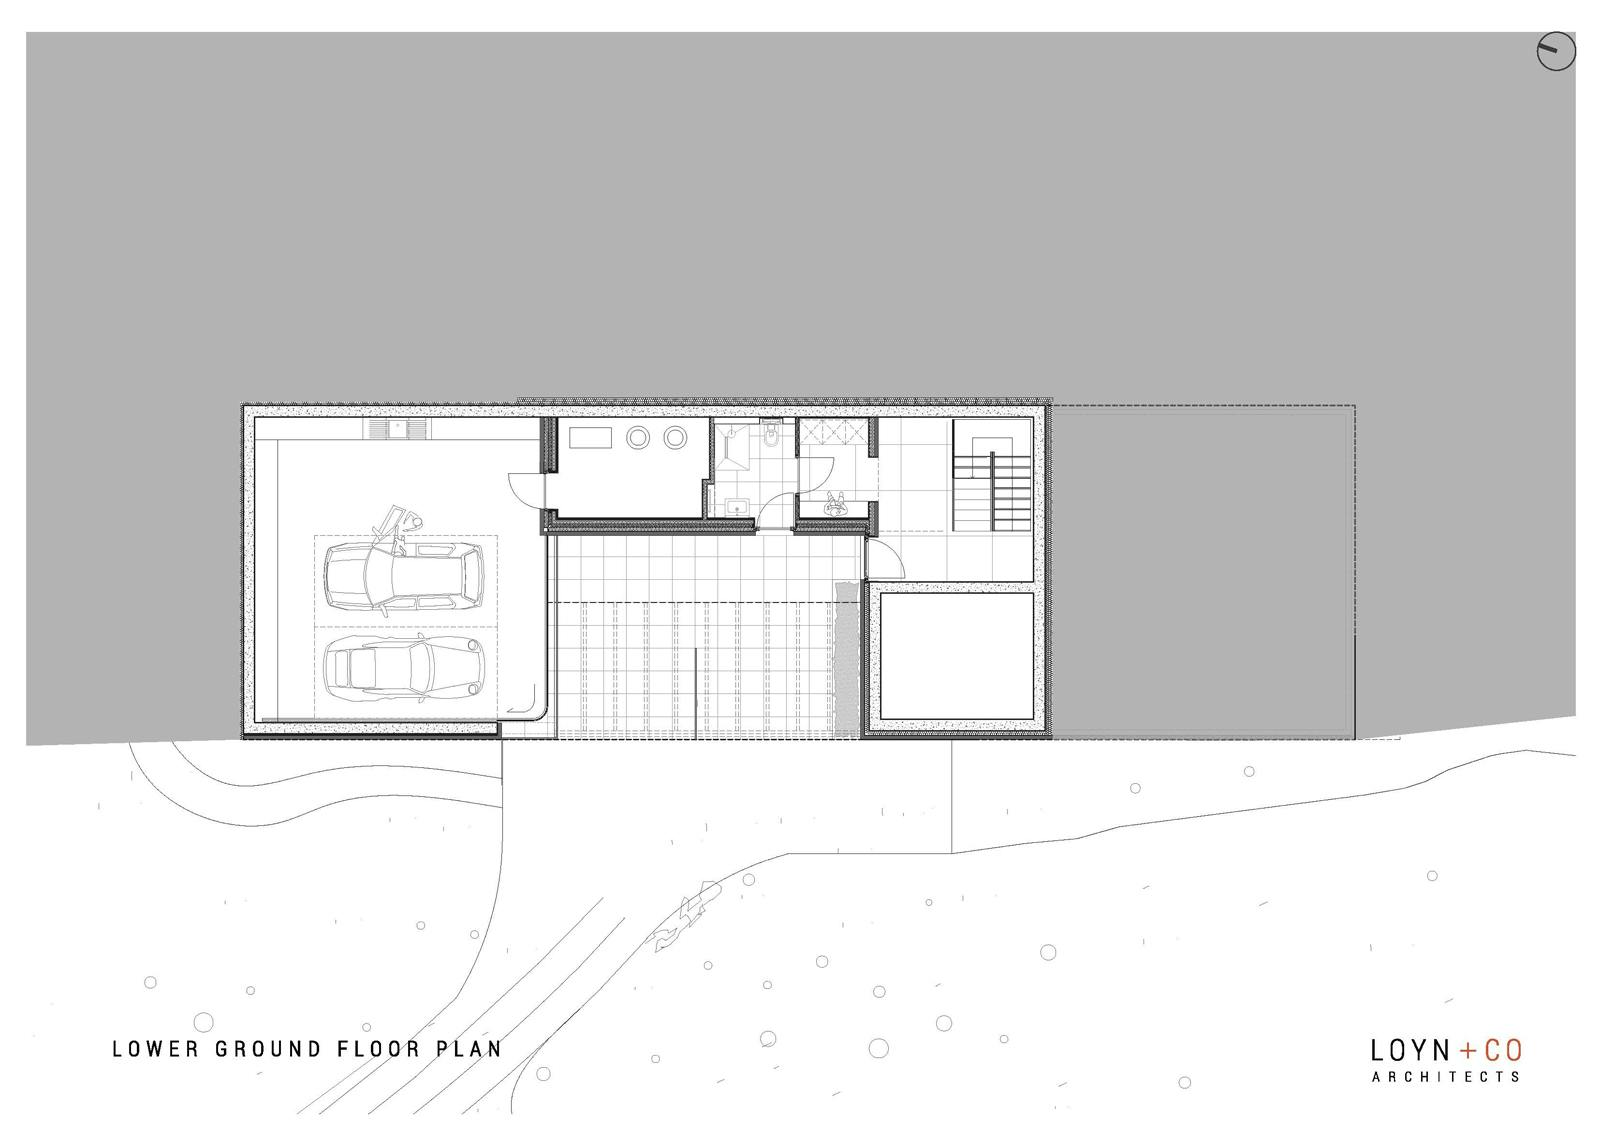 02-lower-ground-floor-plan.jpg